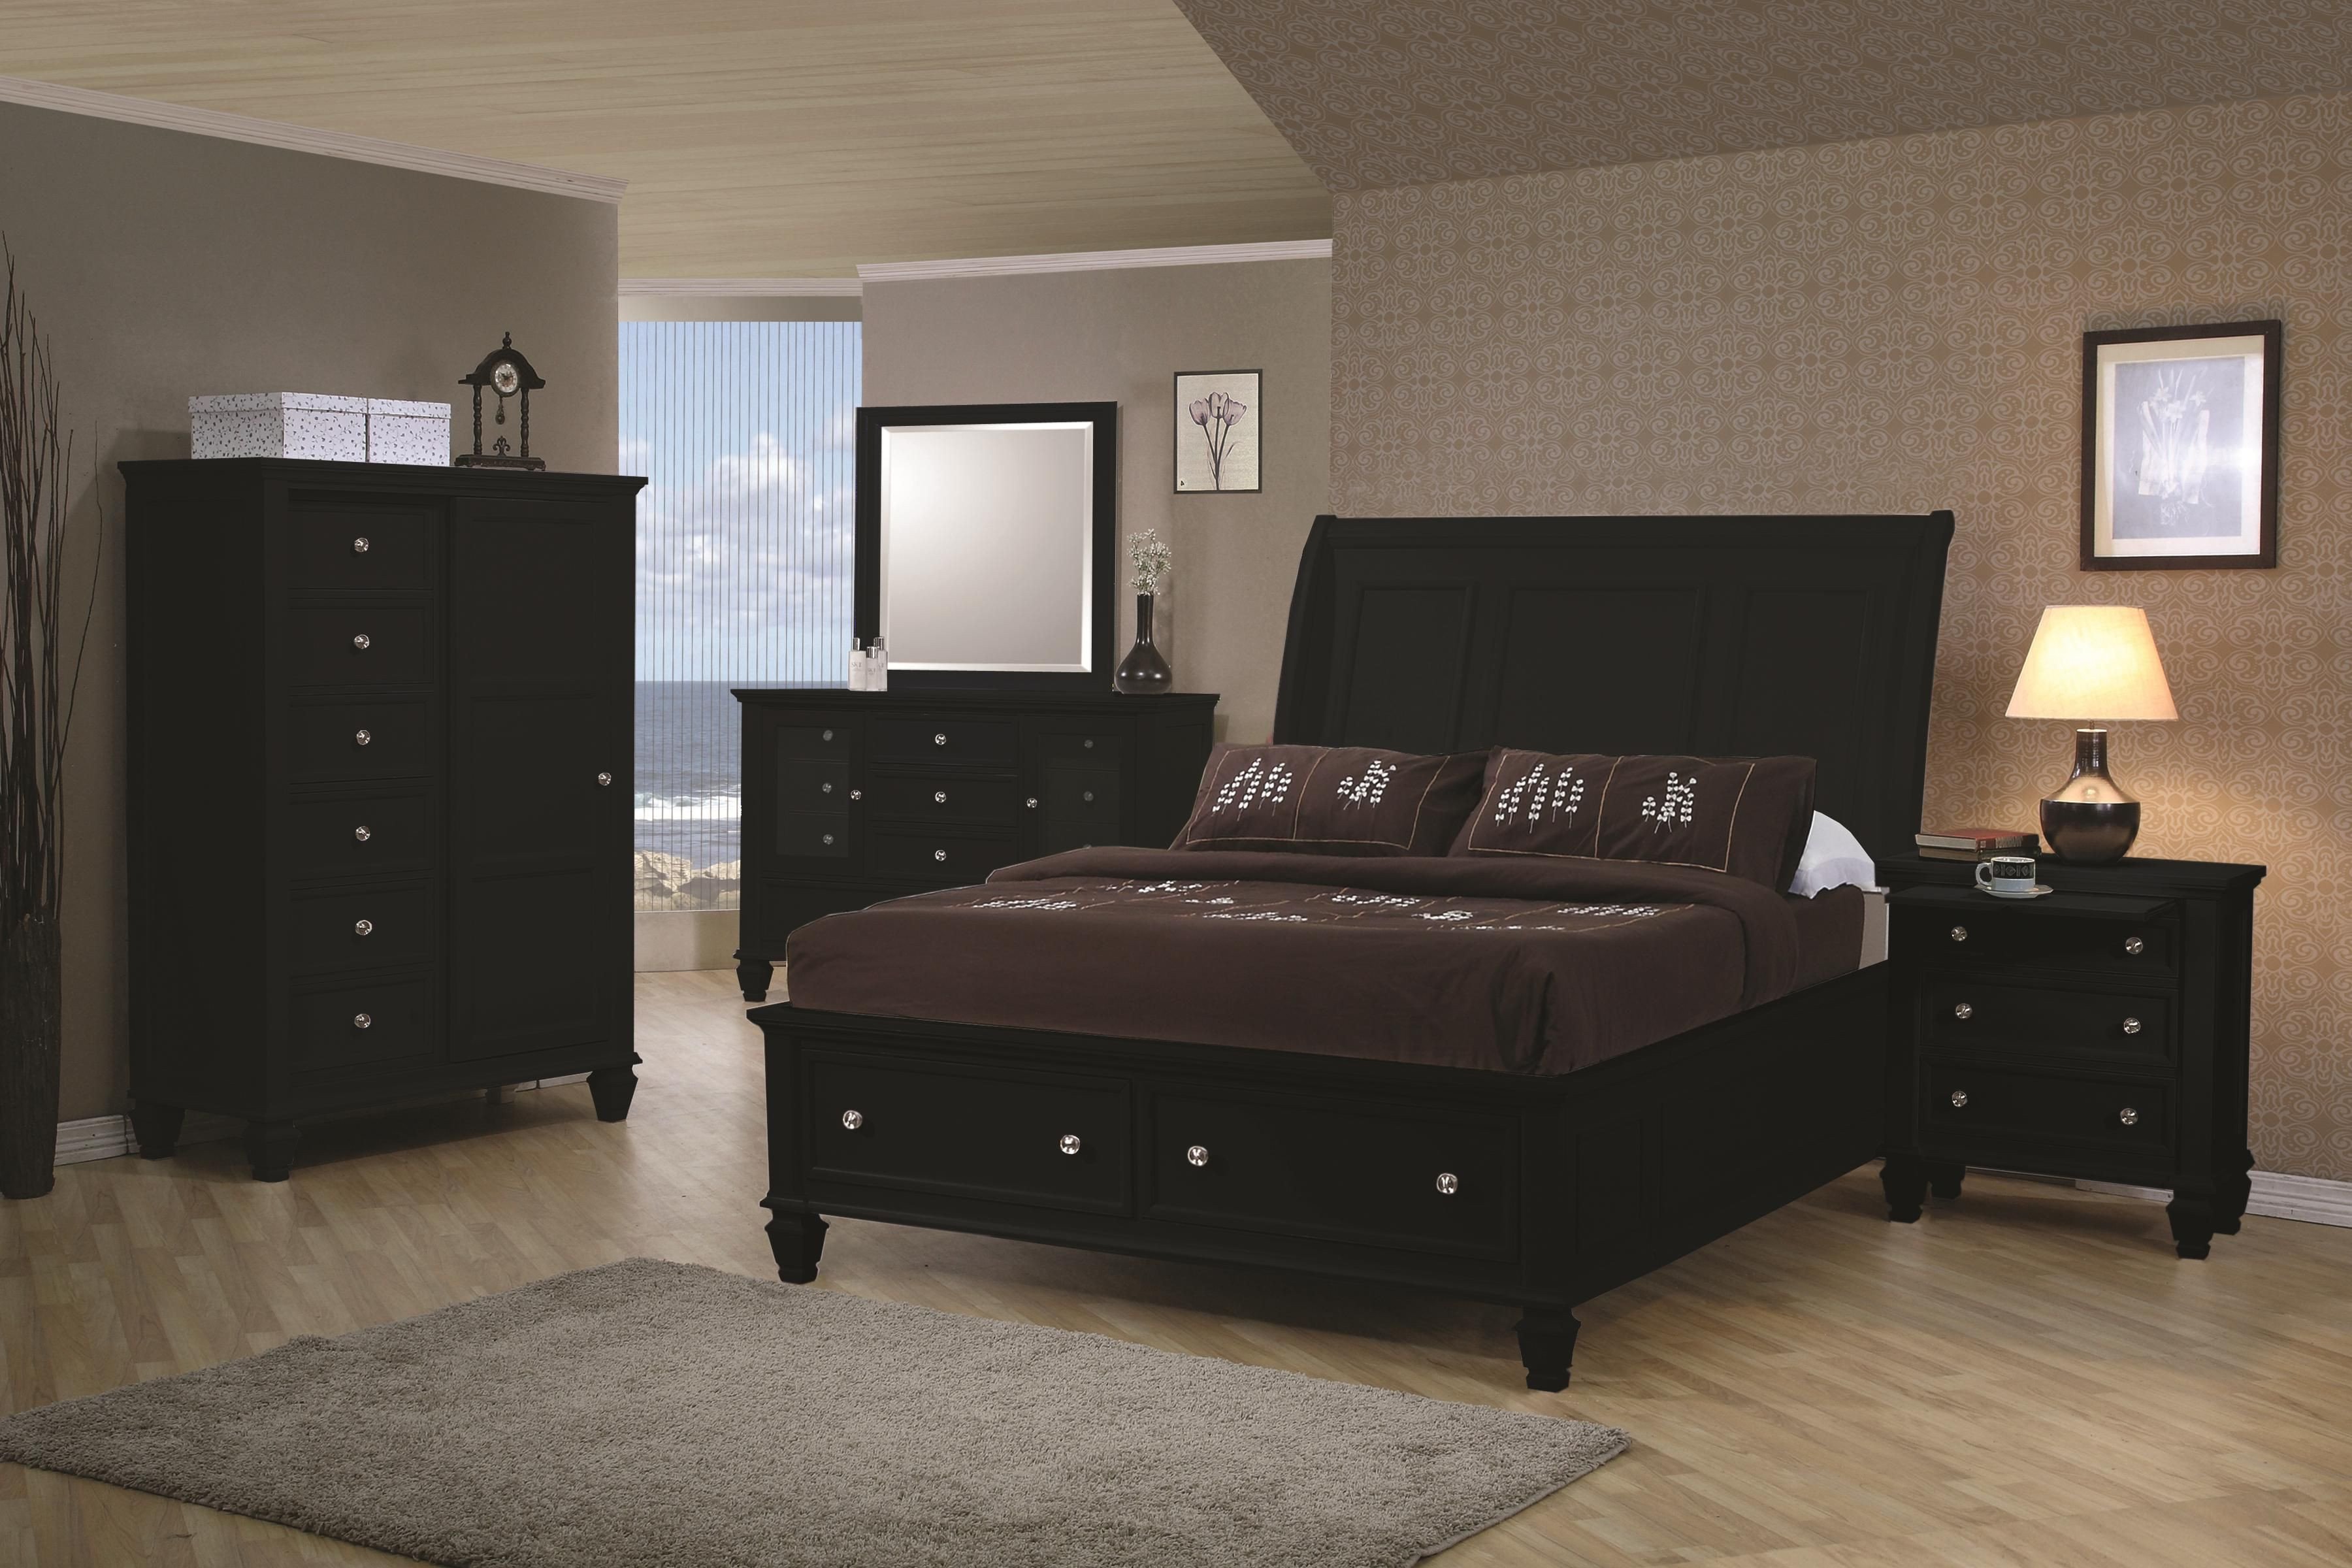 black and wooden bedroom furniture